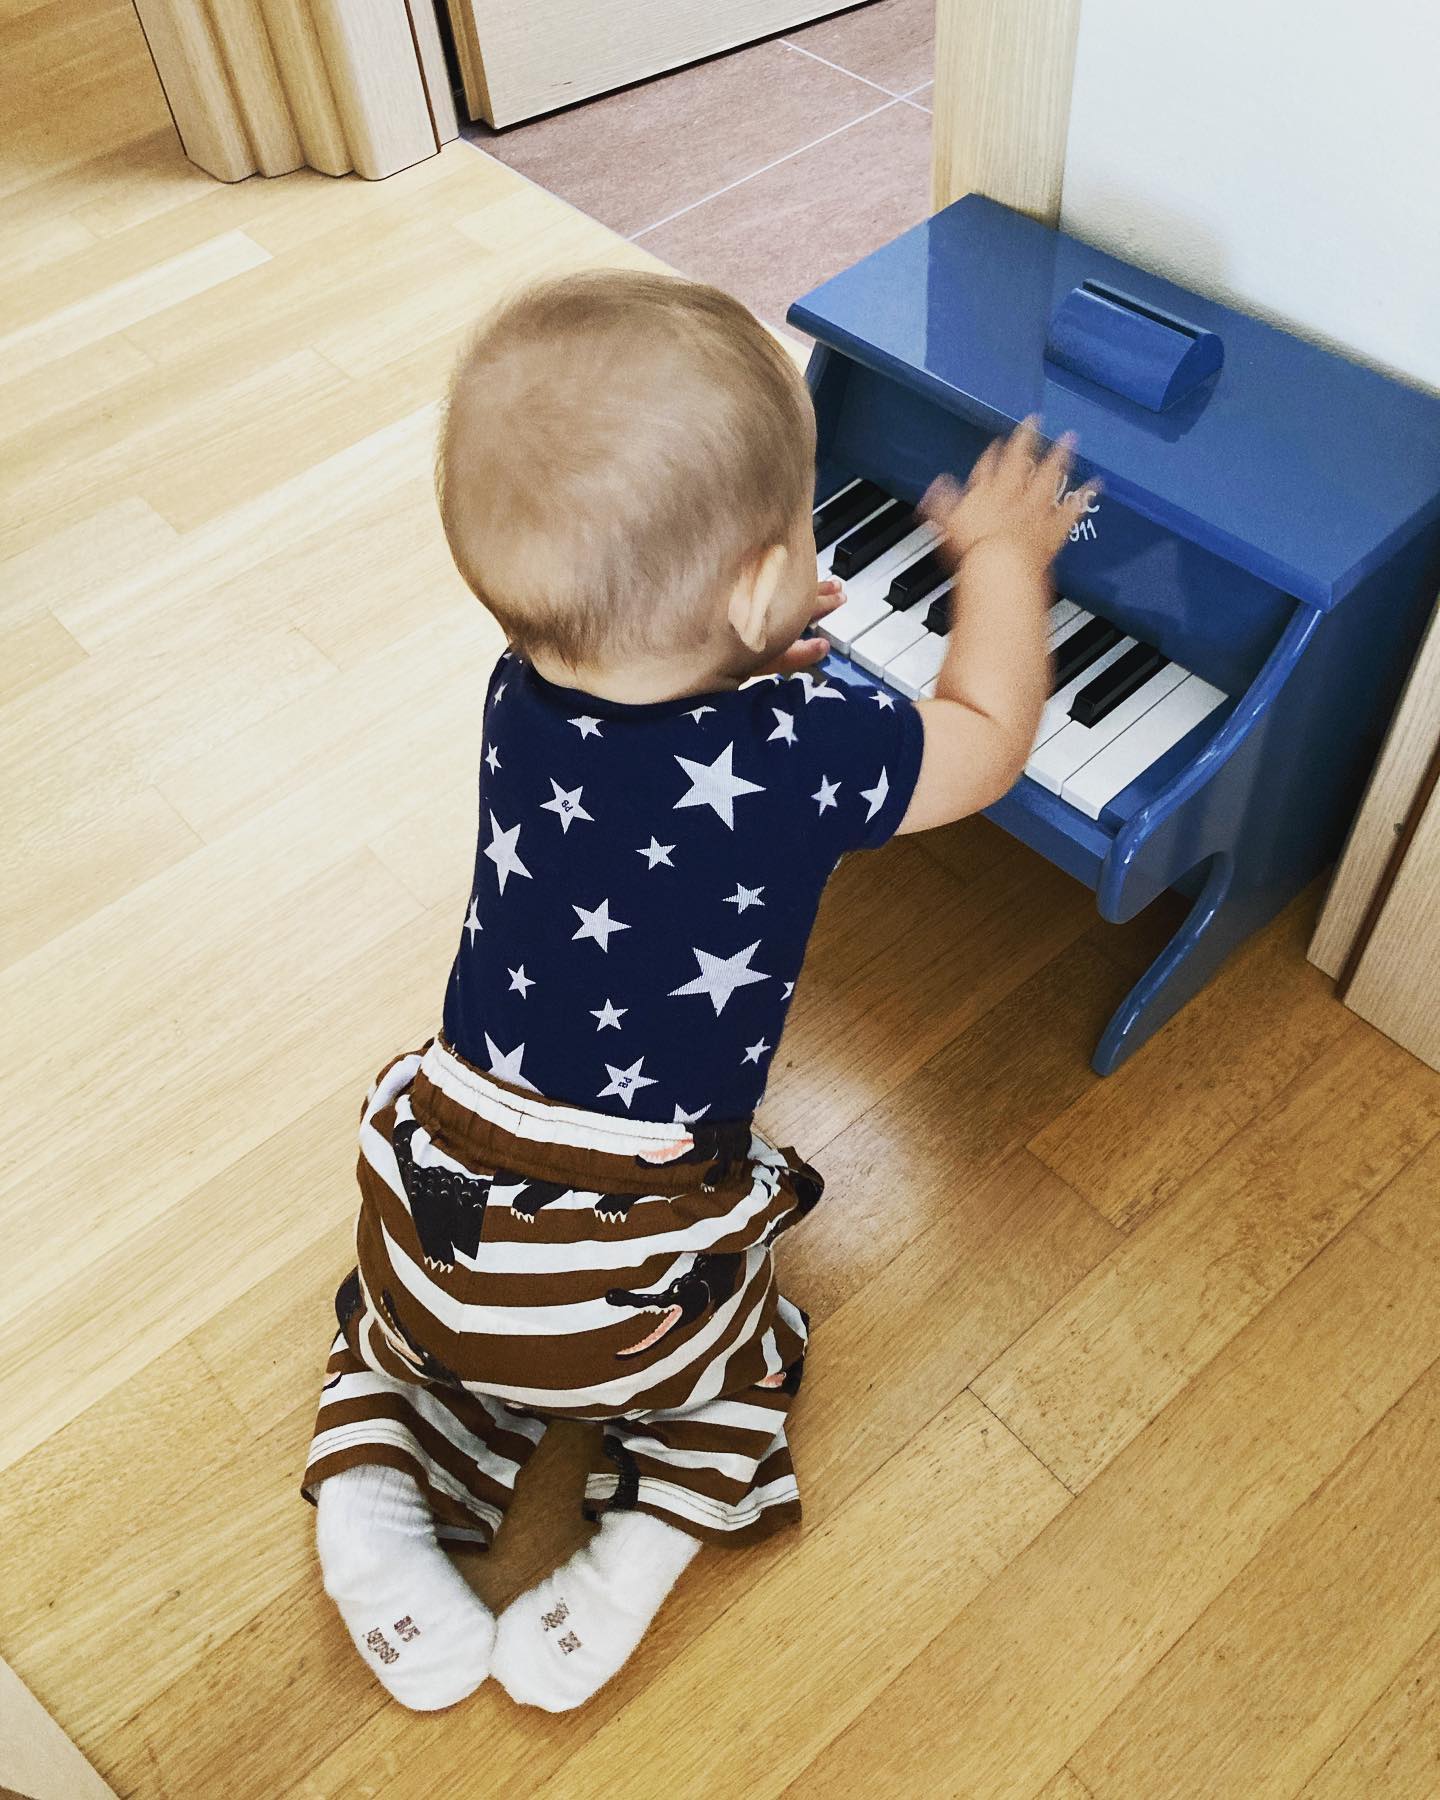 🎼🎹🥁🧡 piccolo Ludwig van #beethoven in concerto

#momslife #little #myboy #littleboy